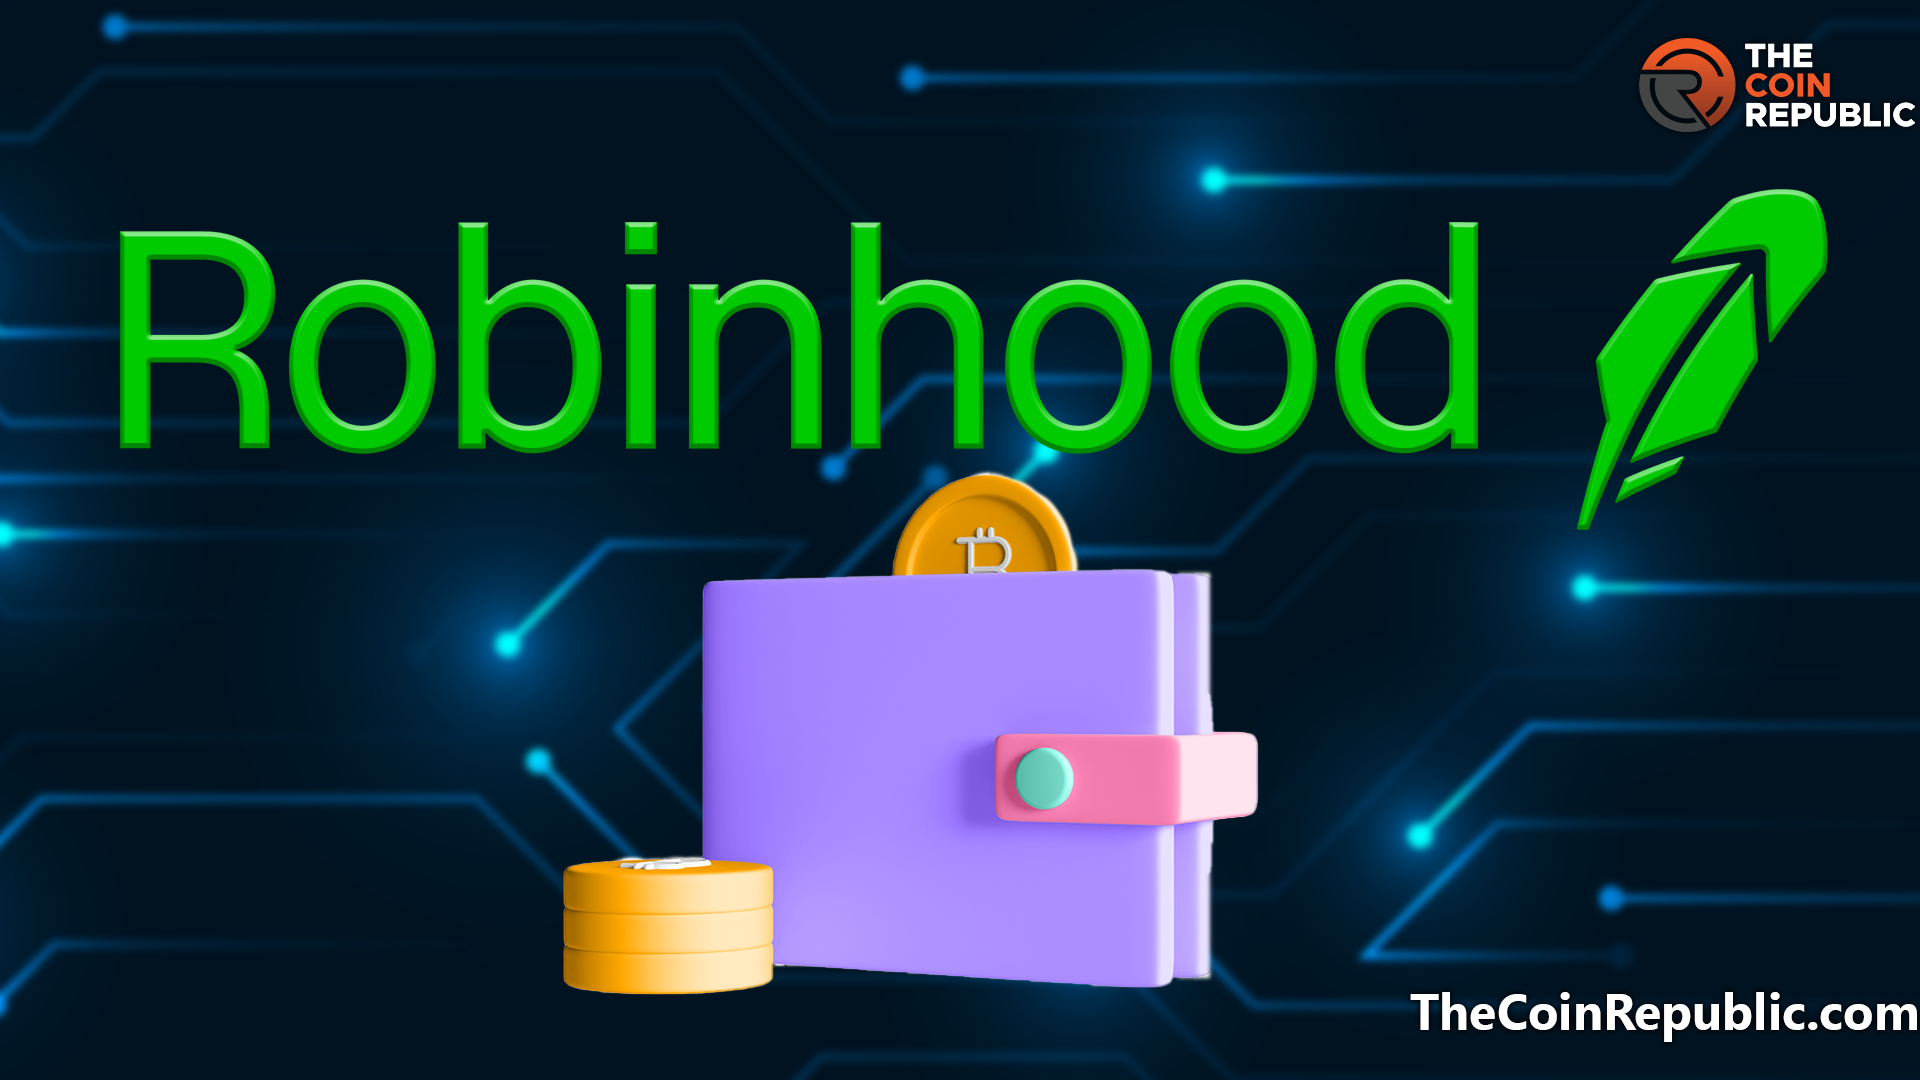 Robinhood کسٹمرز کو ظاہر کرتا ہے کہ موازنہ والی جیبوتی اور ایپس کے ساتھ کرپٹو خریداری کرنے کی صلاحیت ہے جو ویب 3 کے توقعات میں اعتقاد دکھاتا ہے